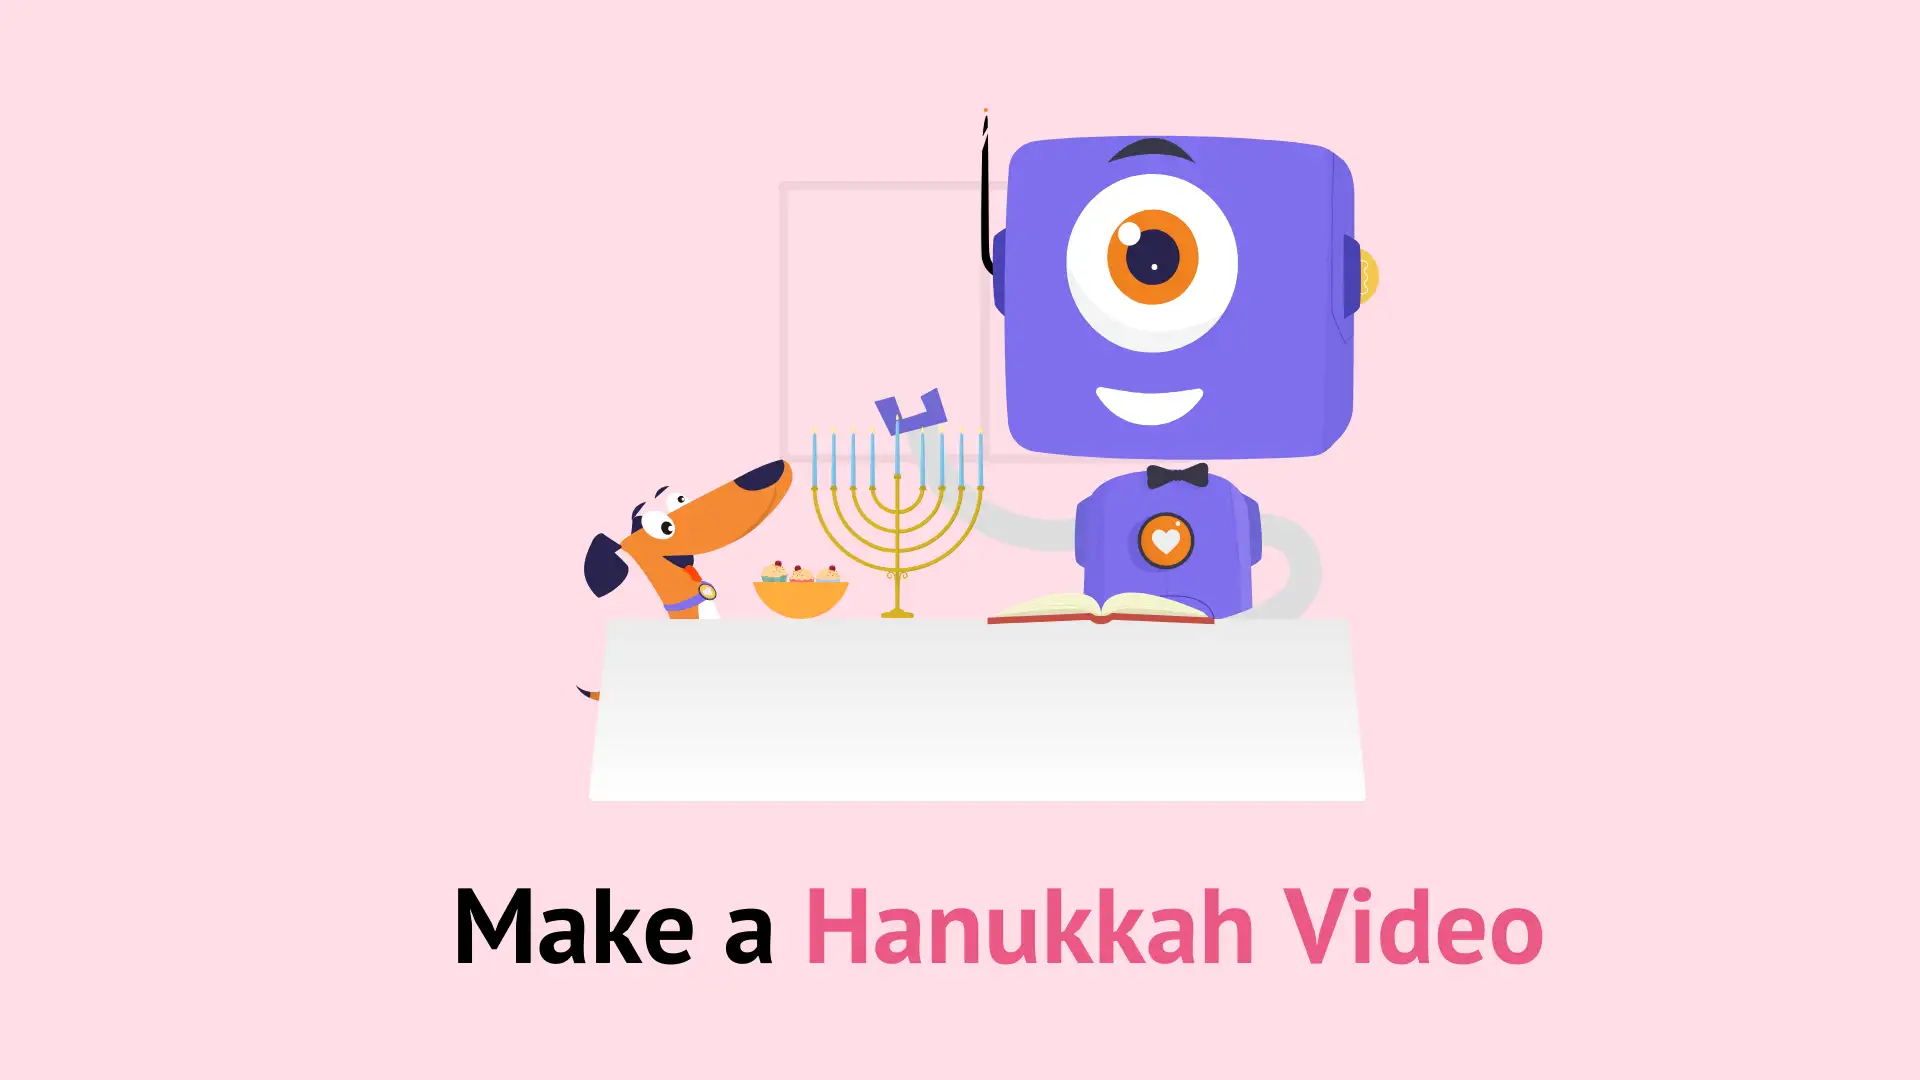 Hanukkah video maker